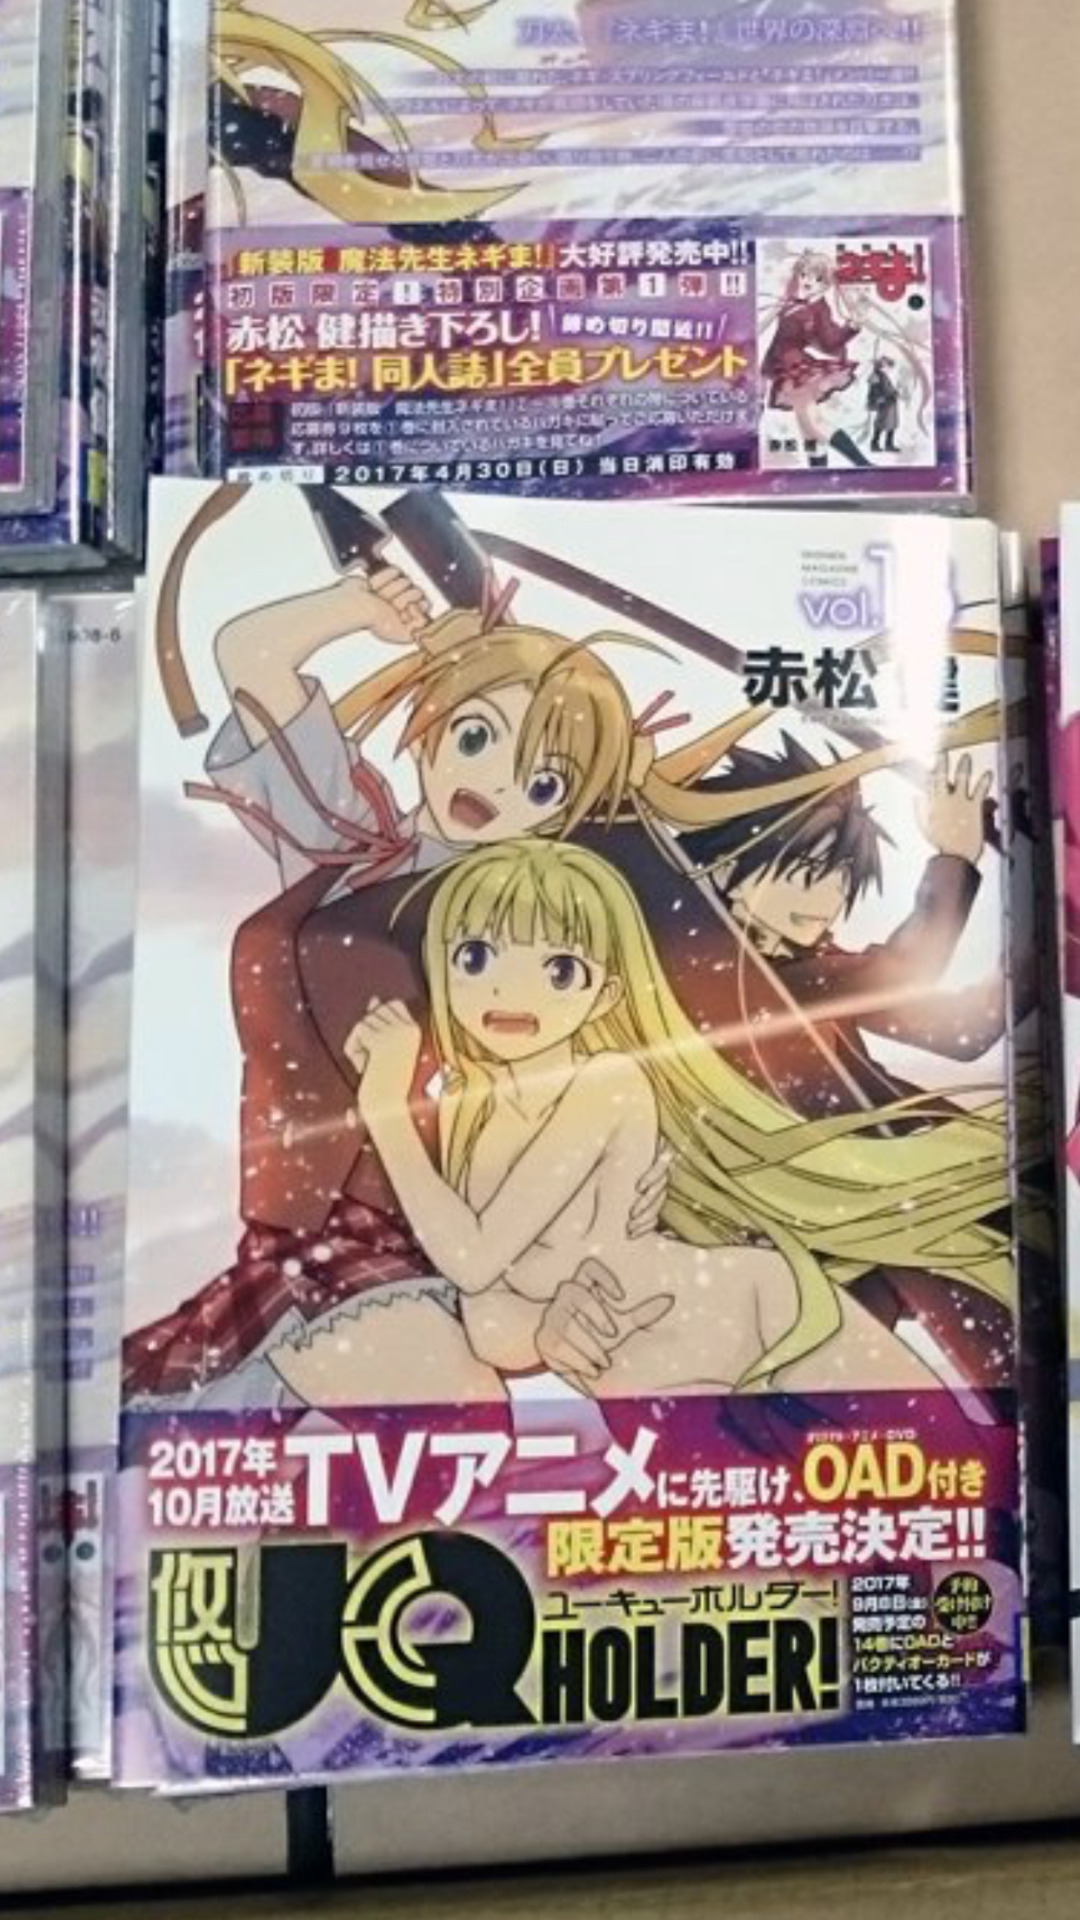 UQ Holder! OAD med LE manga bind 14